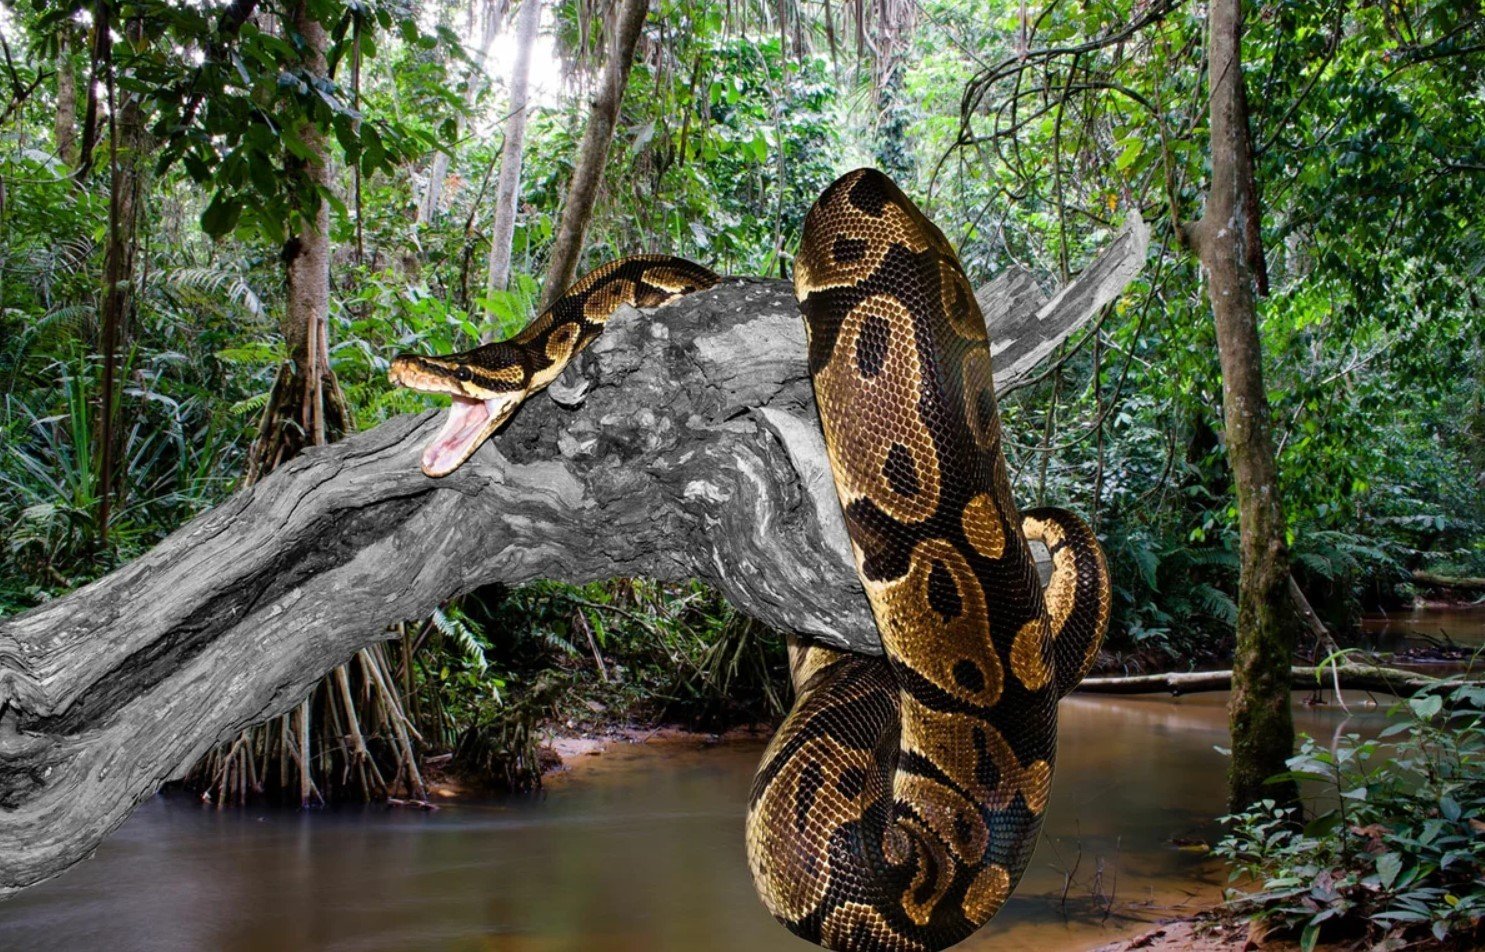 Огромная анаконда. Река Амазонка змея Анаконда. Южная Америка Амазонка Анаконда. Анакондой сельвы Южной Америке. Водяной удав Анаконда.